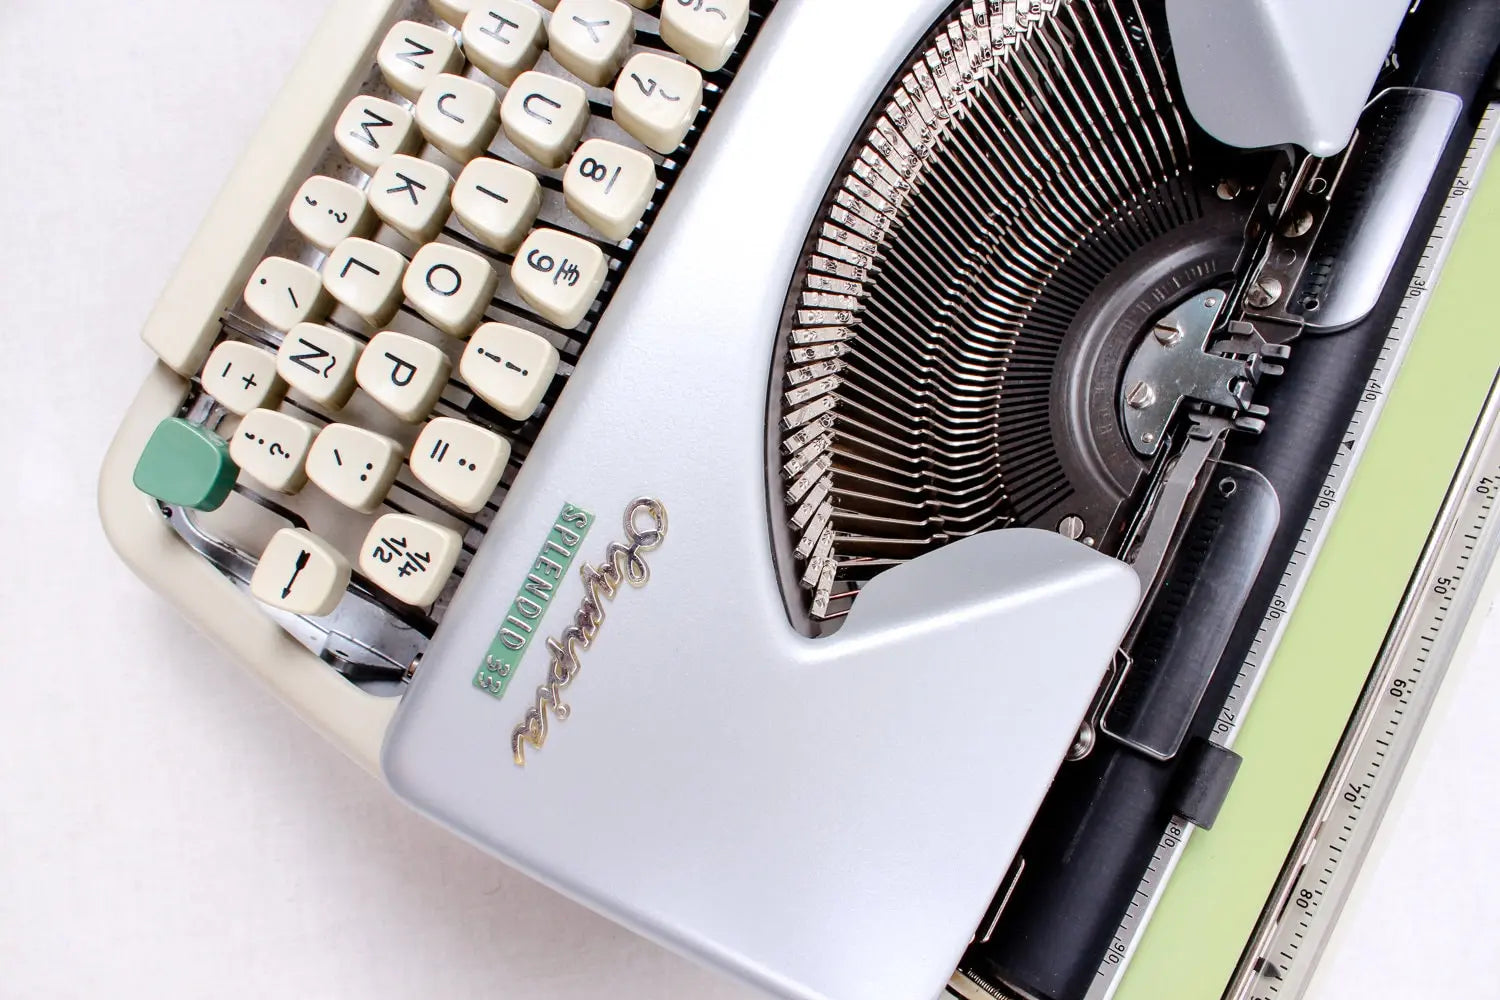 SALE! - Olympia Splendid 33 Cream & Silver Typewriter, Vintage, Mint Condition, Professionally Serviced - ElGranero Typewriter.Company